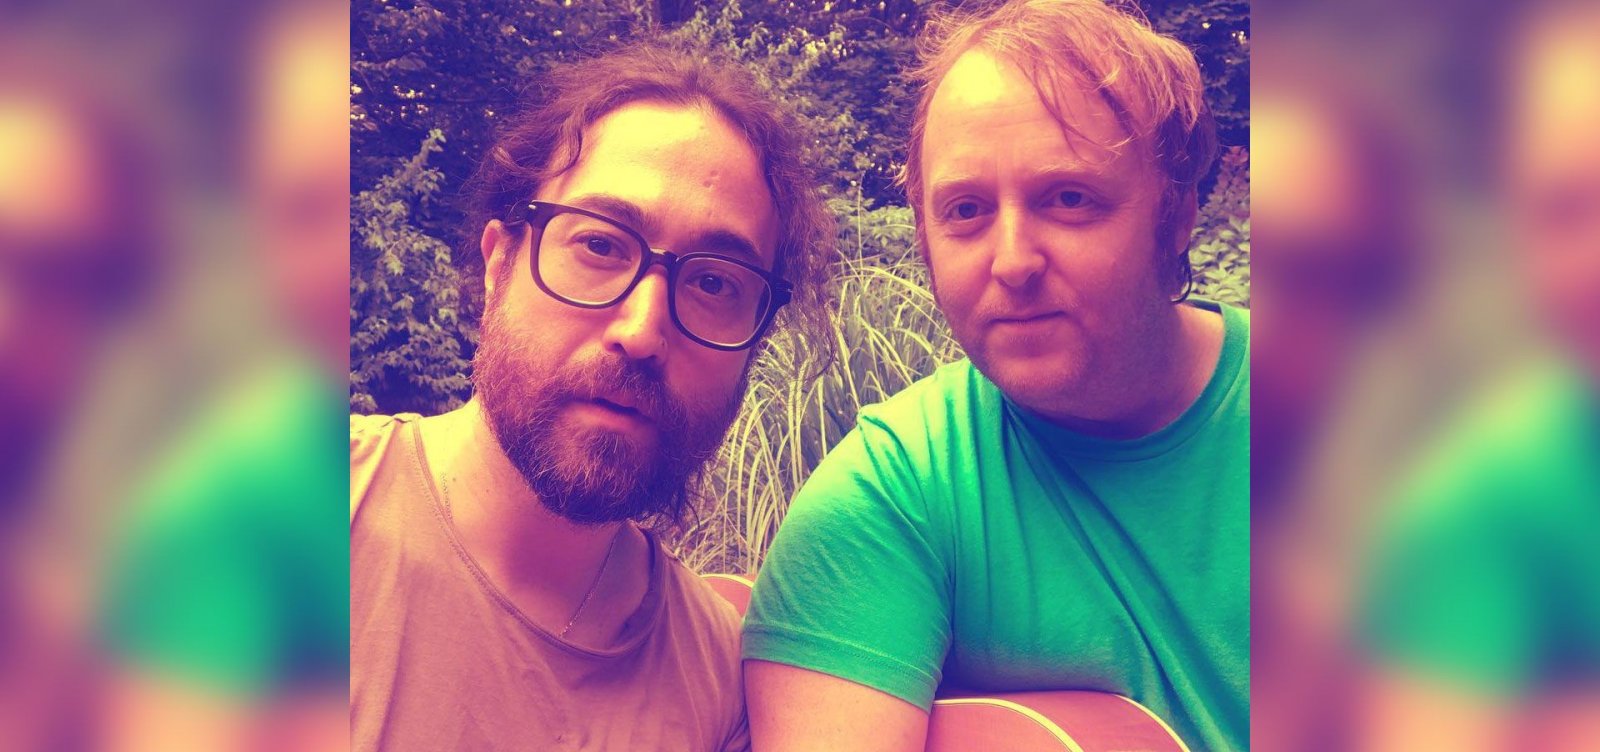 Filhos de John Lennon & Paul McCartney, Sean e James lançam música juntos: 'Primrose Hill'